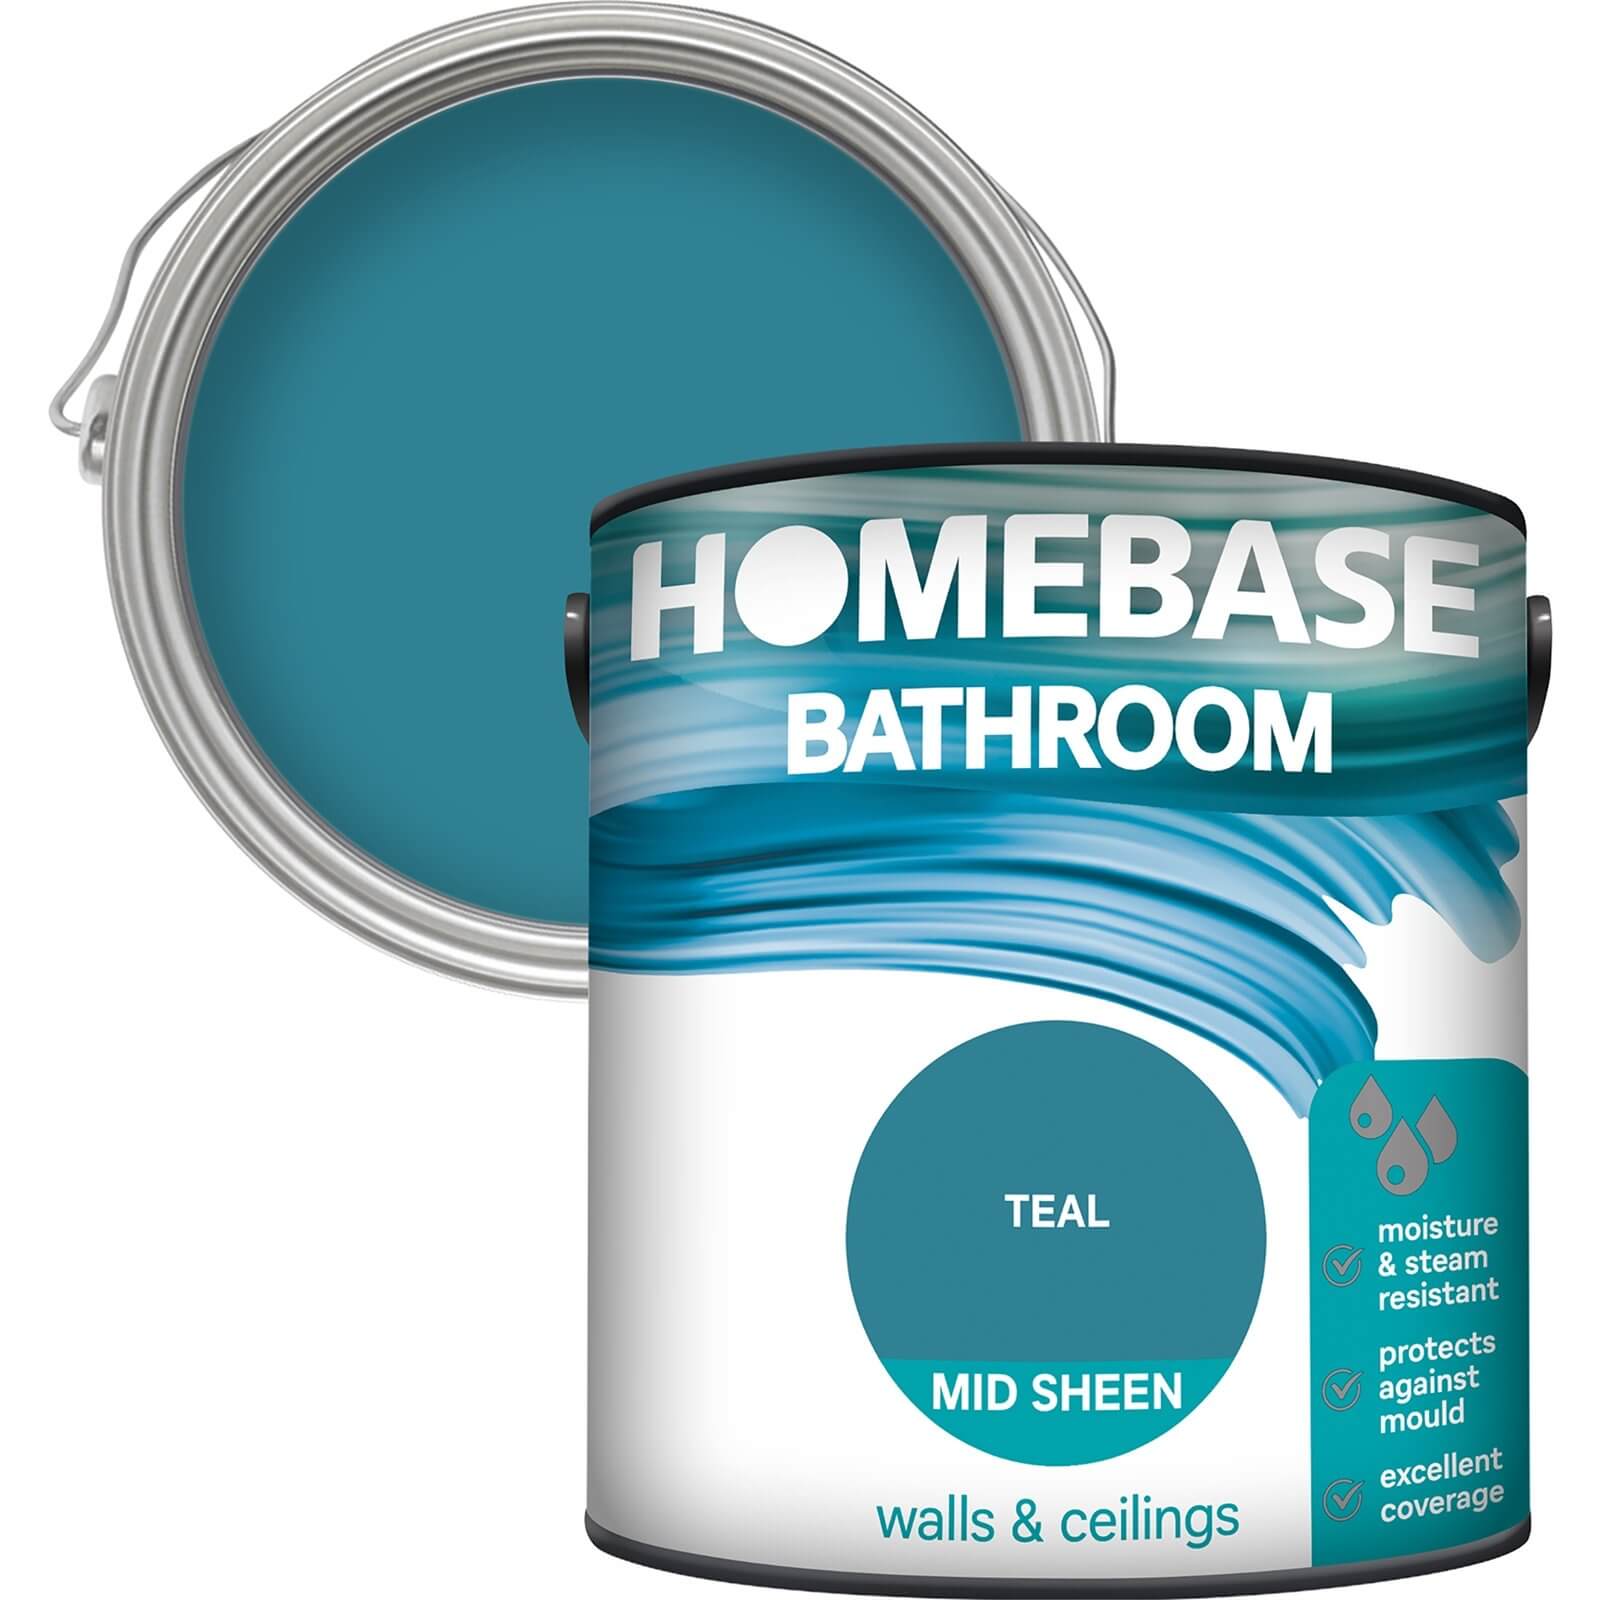 Homebase Bathroom Mid Sheen Paint - Teal 2.5L